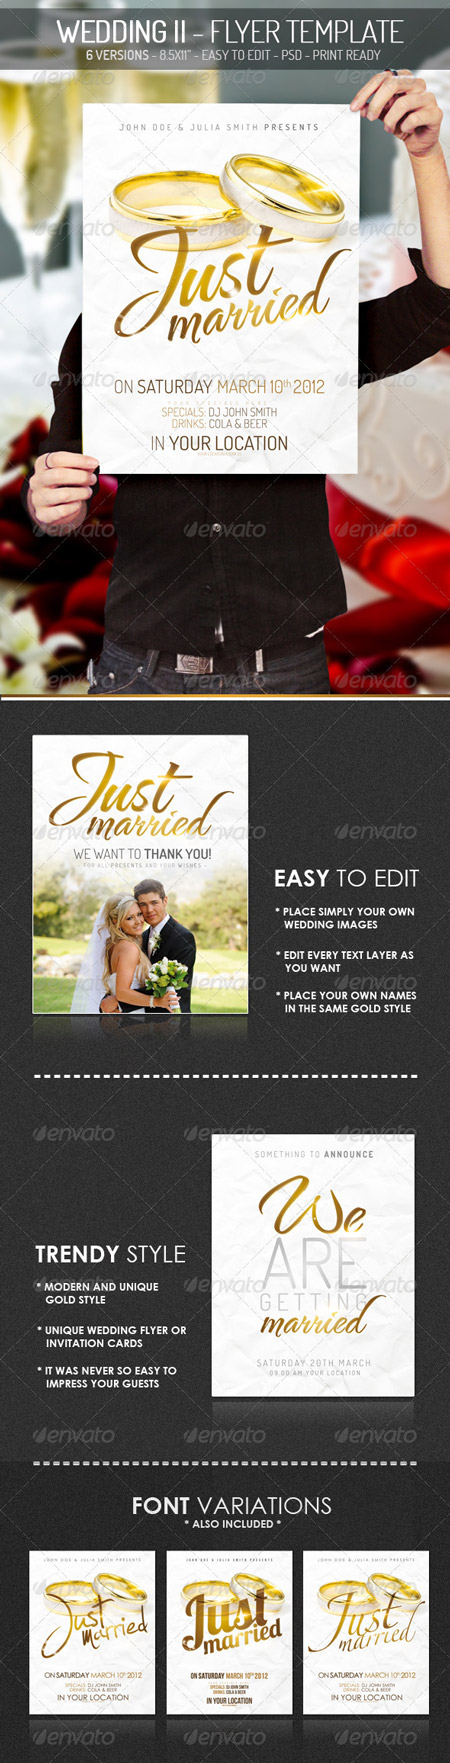 GraphicRiver Wedding II - Flyer Template